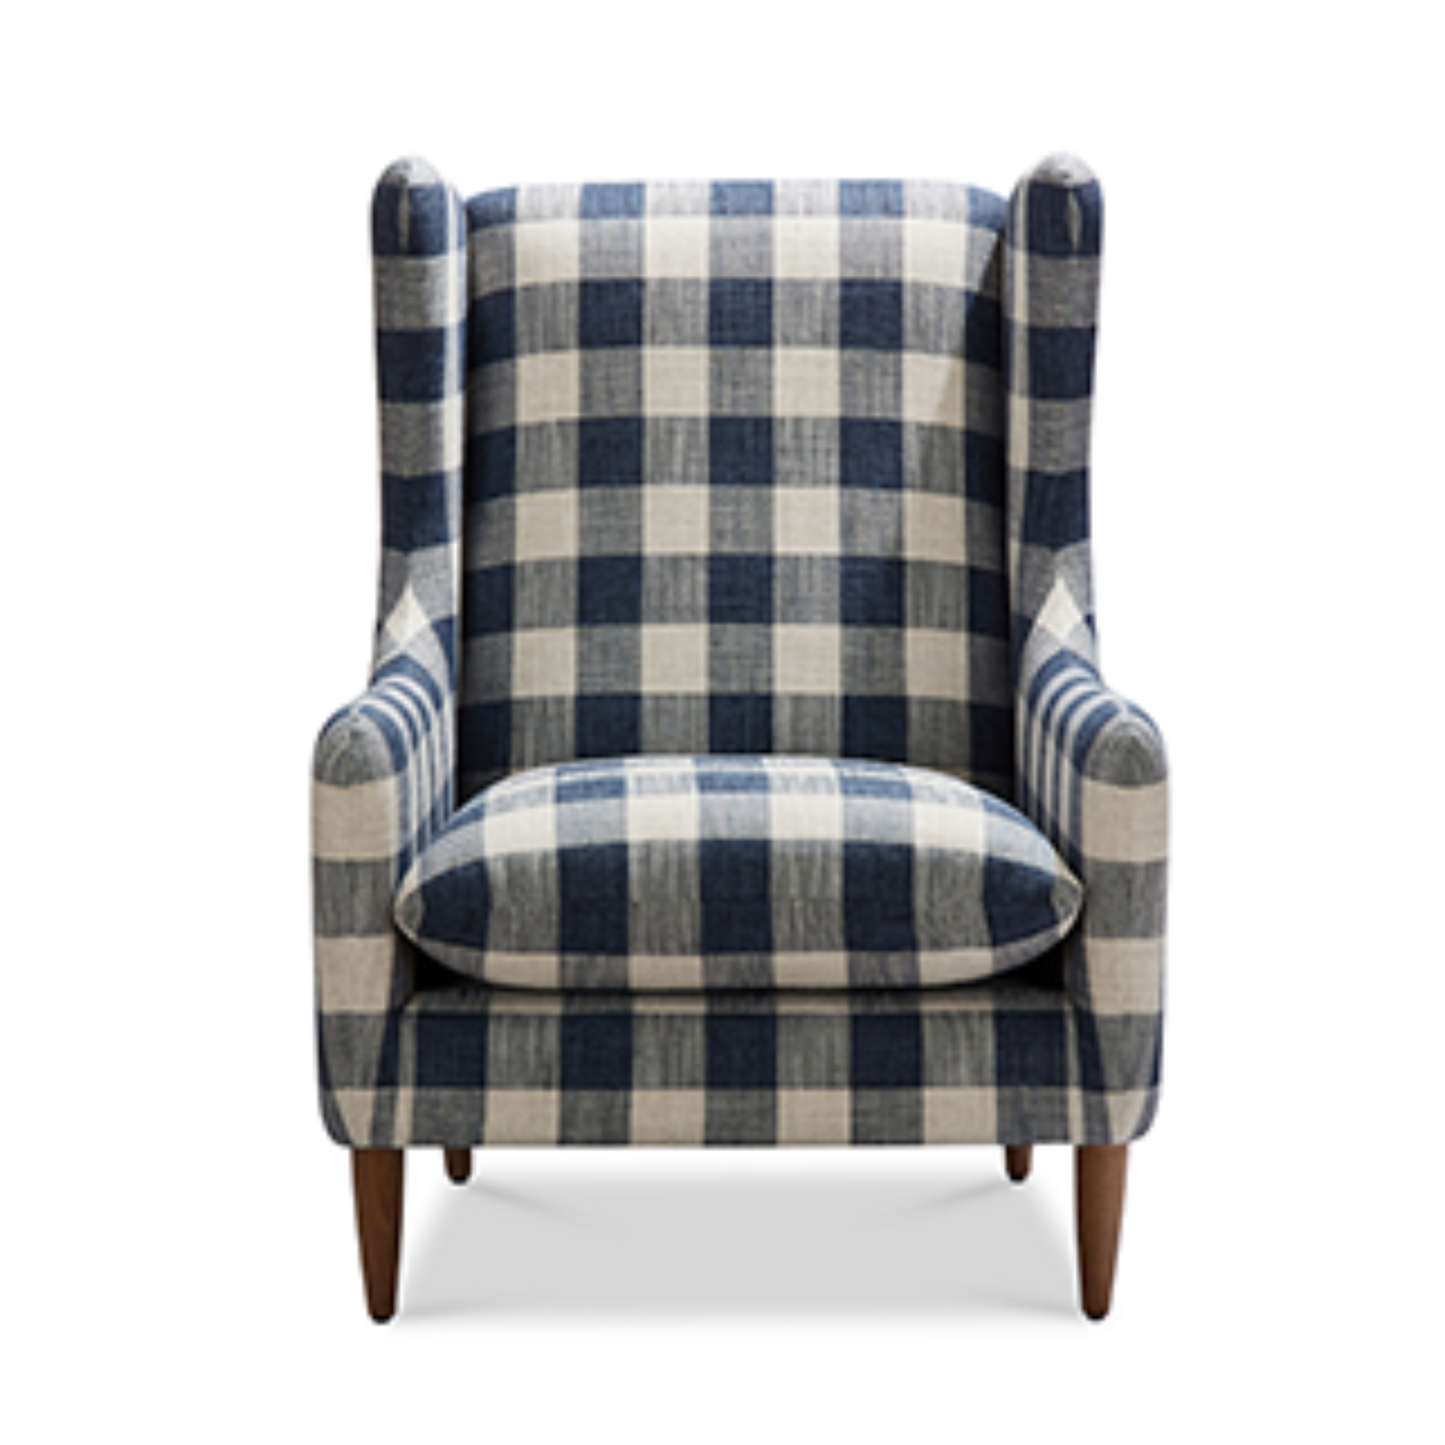 Heaton Chair by Molmic